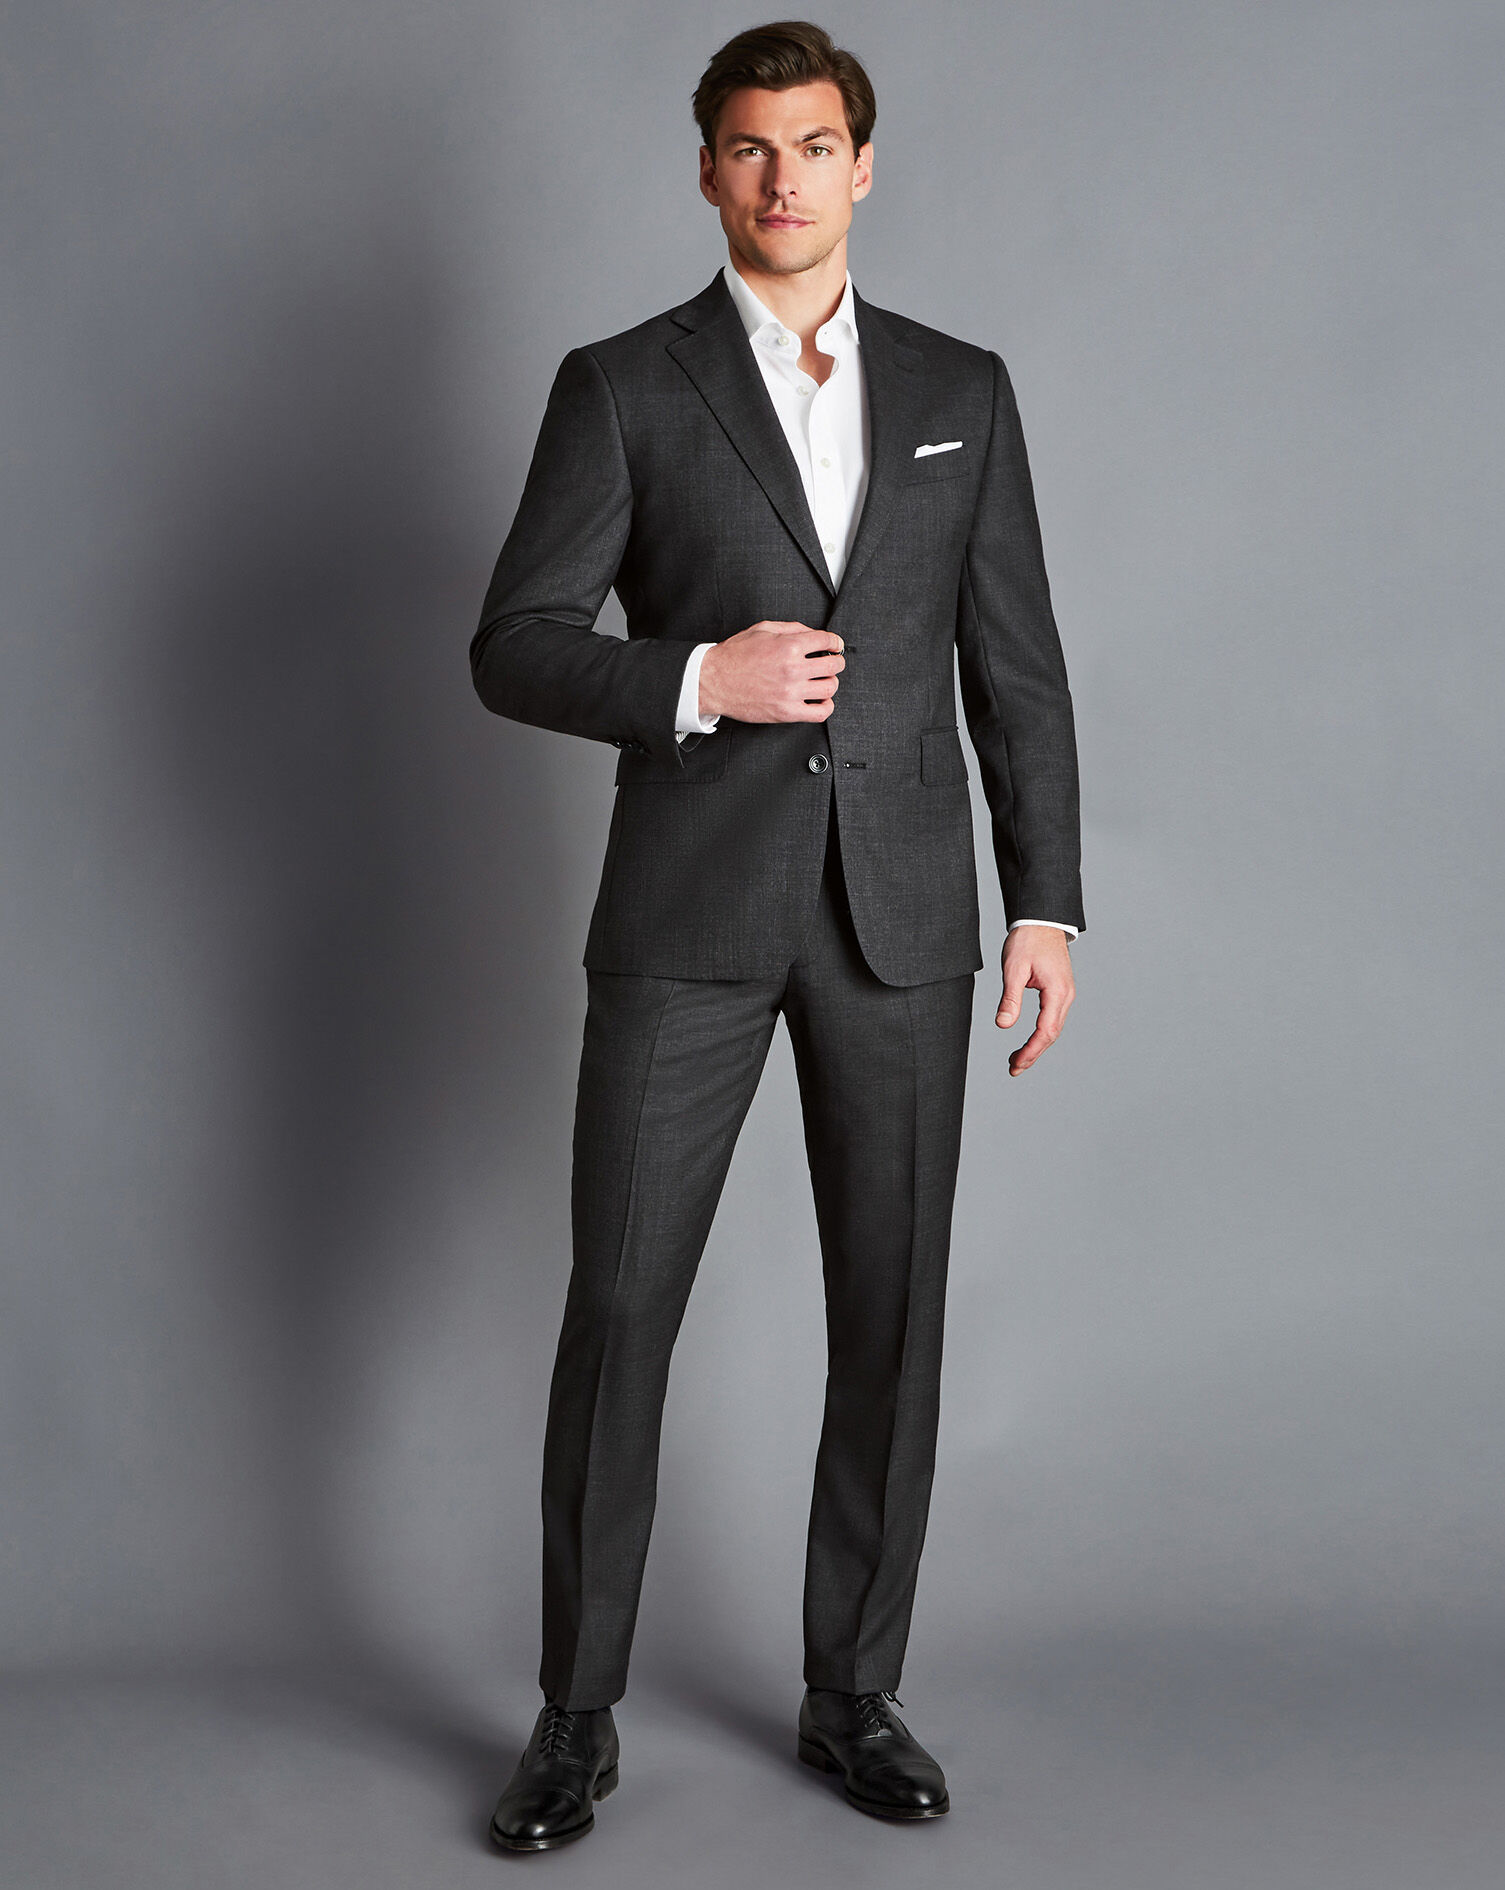 Charcoal Performance Suit by Calvin Klein  Suit Rental